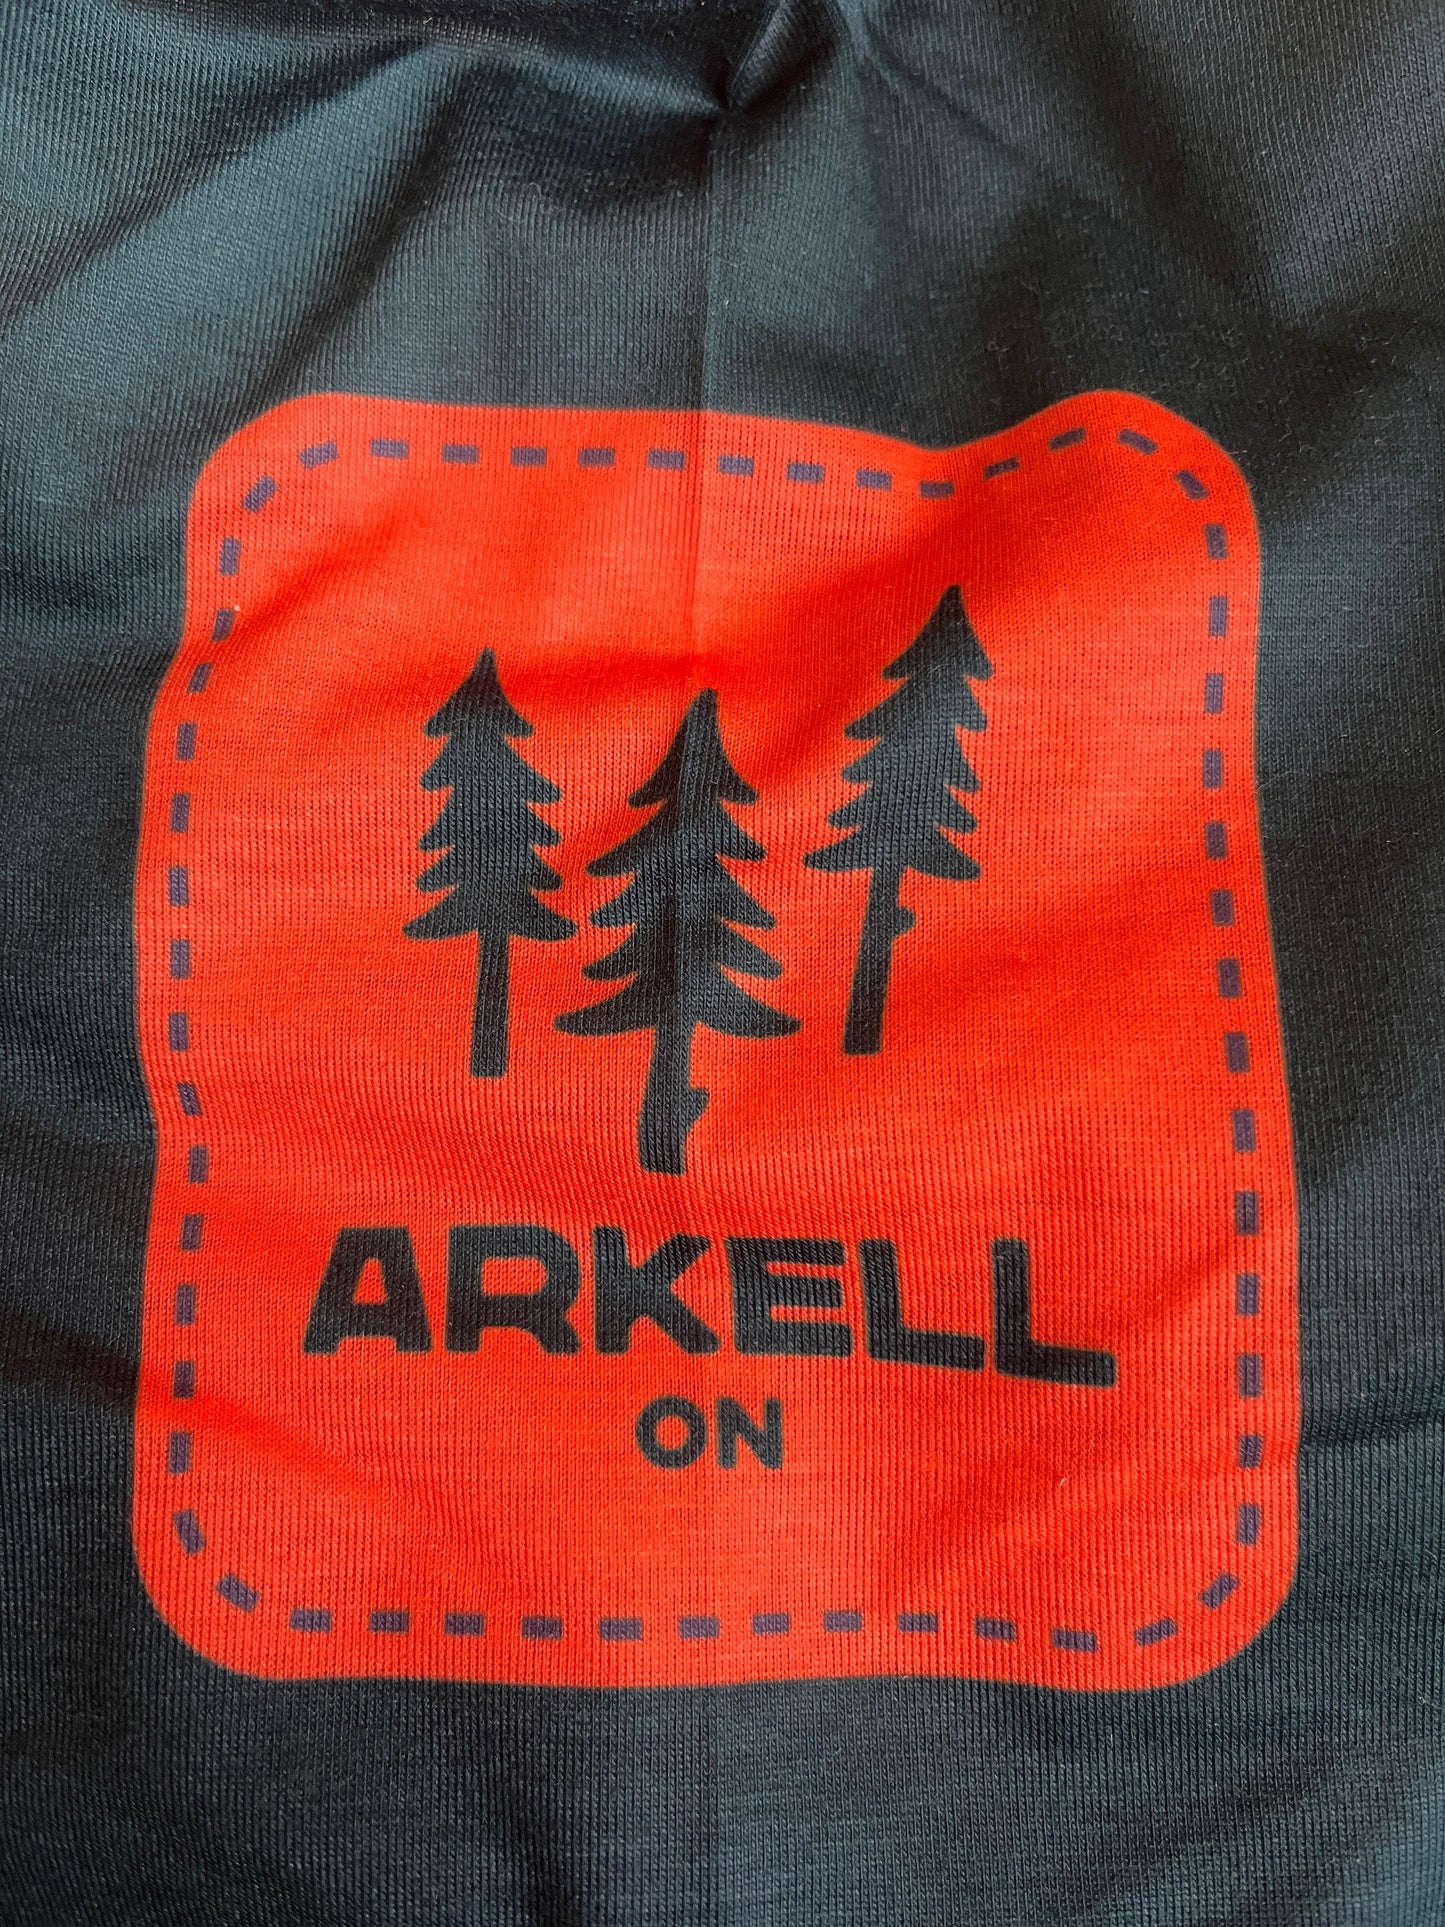 The Arkell Jersey (Short Sleeve)